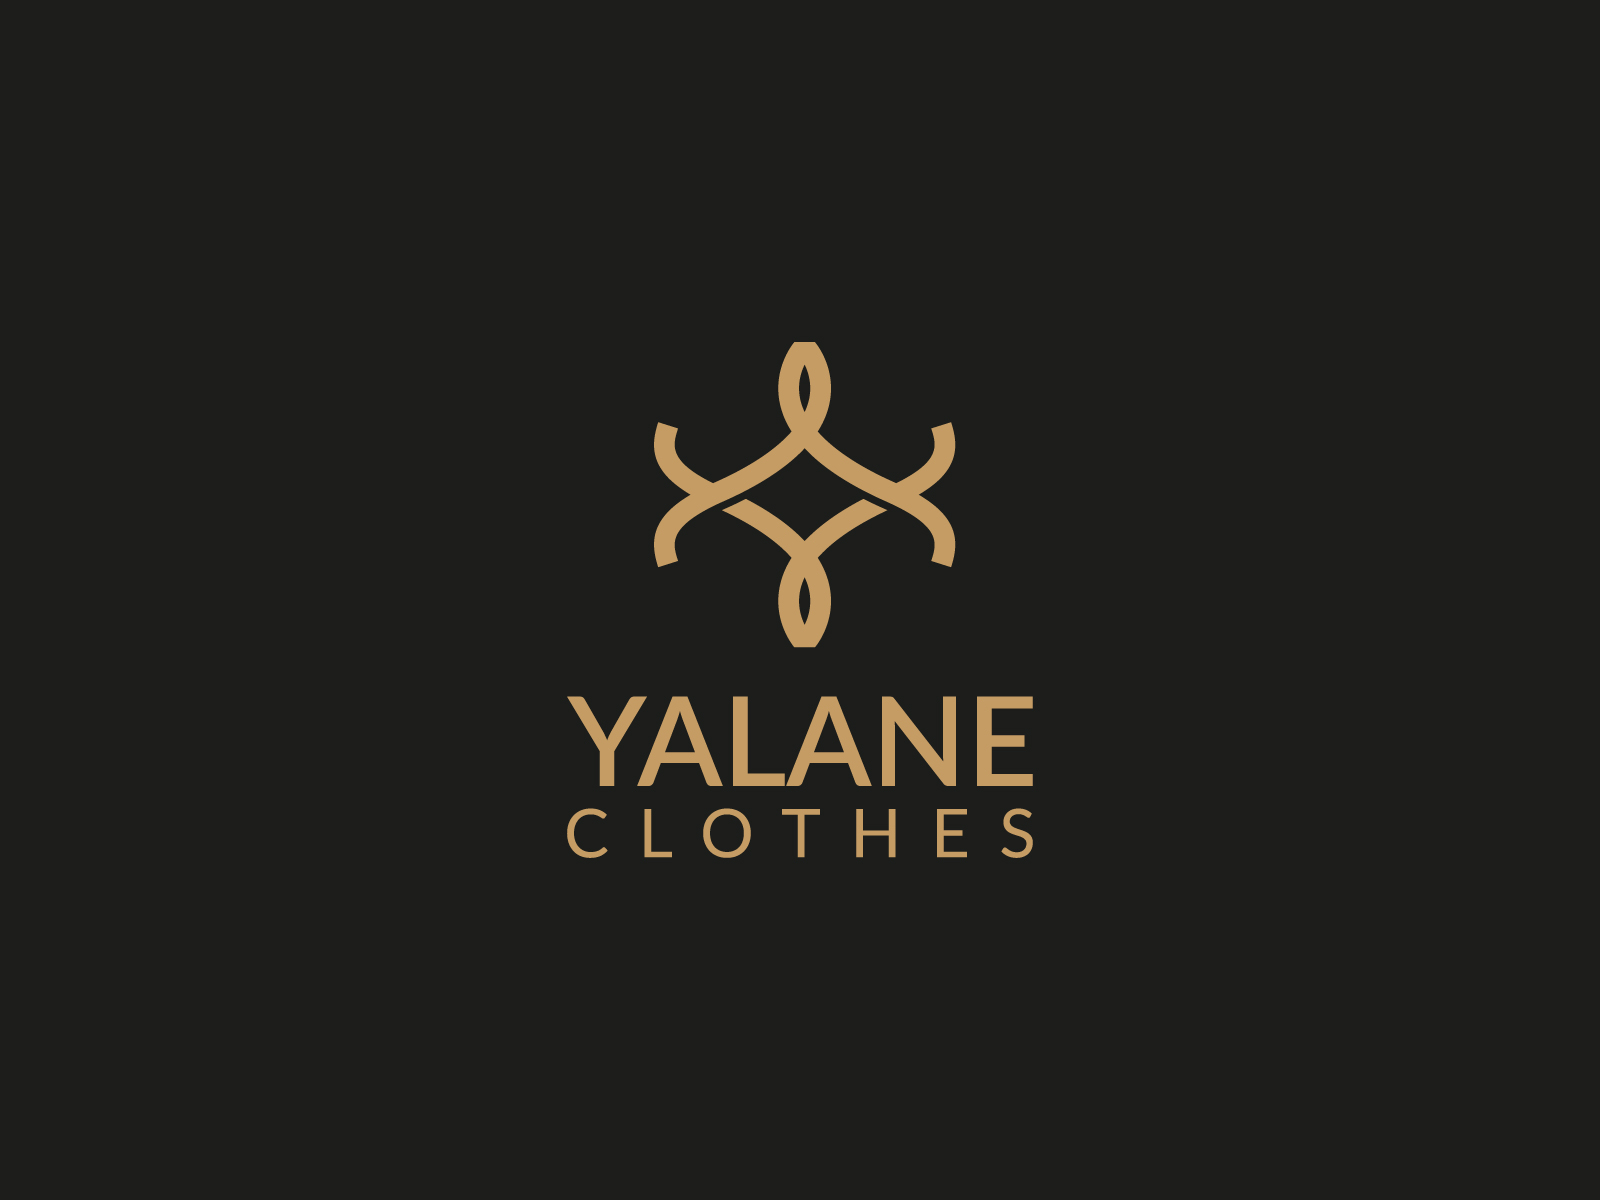 Yalane Clothes by Fauzimqn on Dribbble